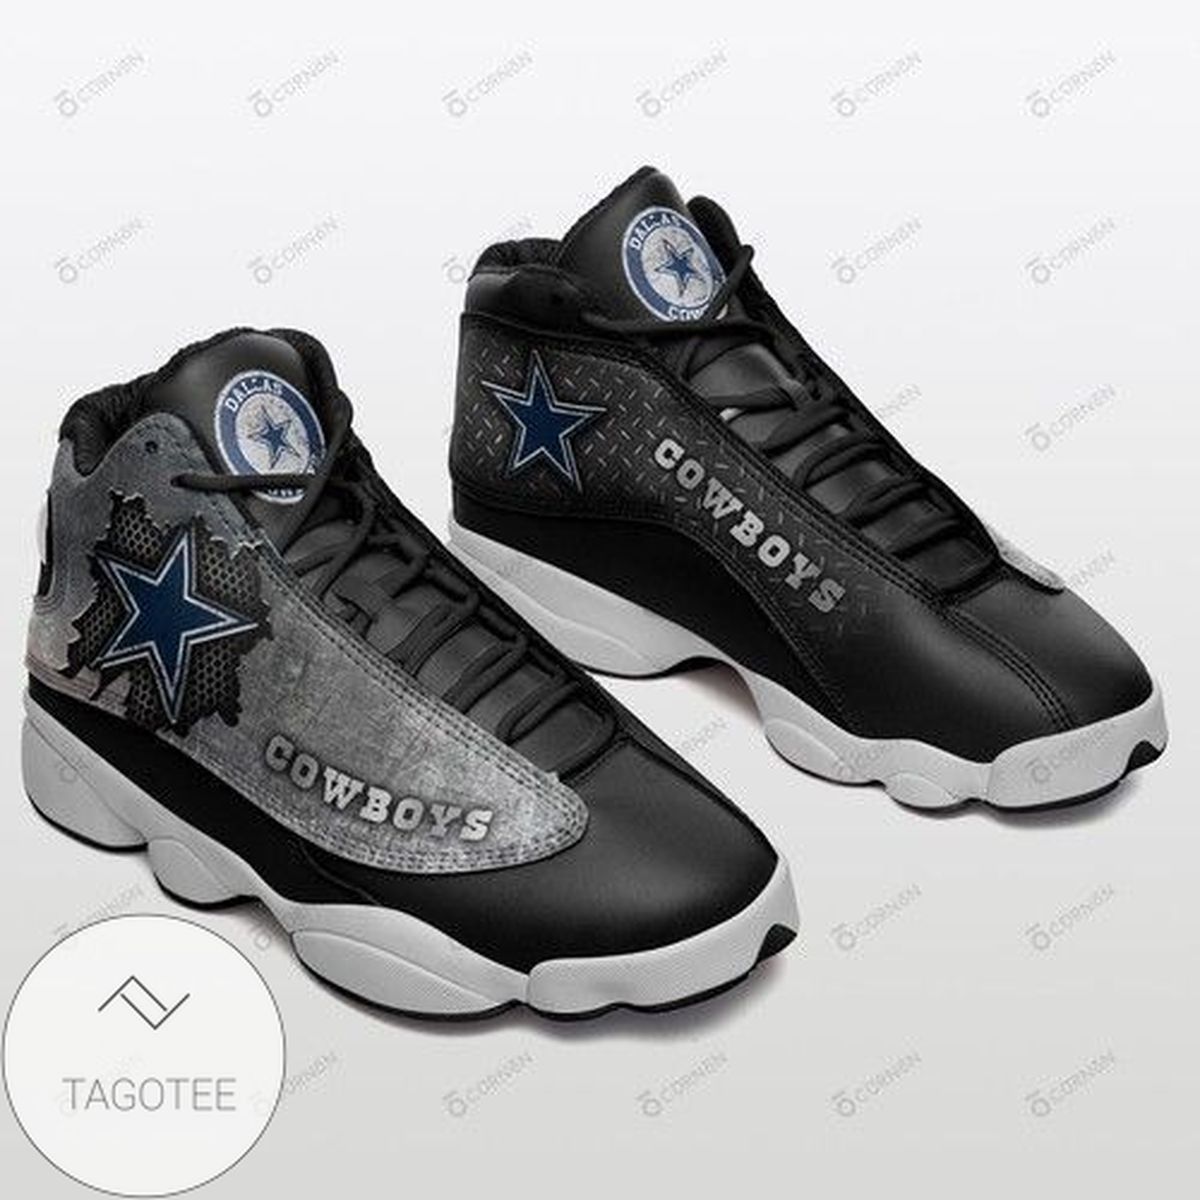 Dallas Cowboys Air Jordan 13 142 Shoes Sport Sneakers For Fan